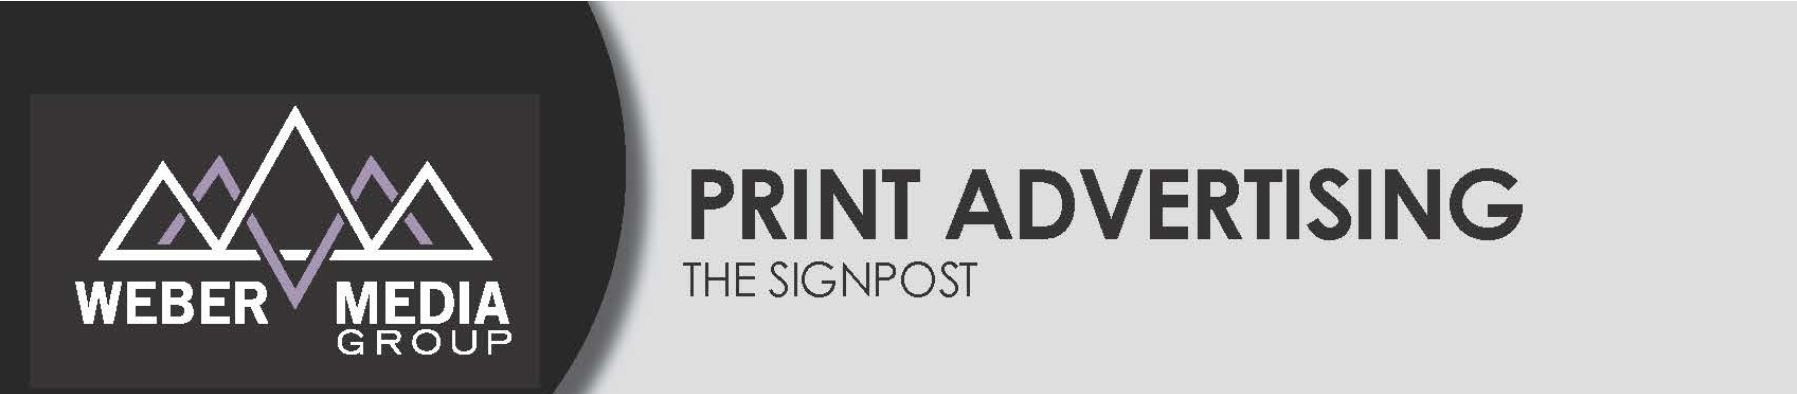 Signpost Print Advertising Header